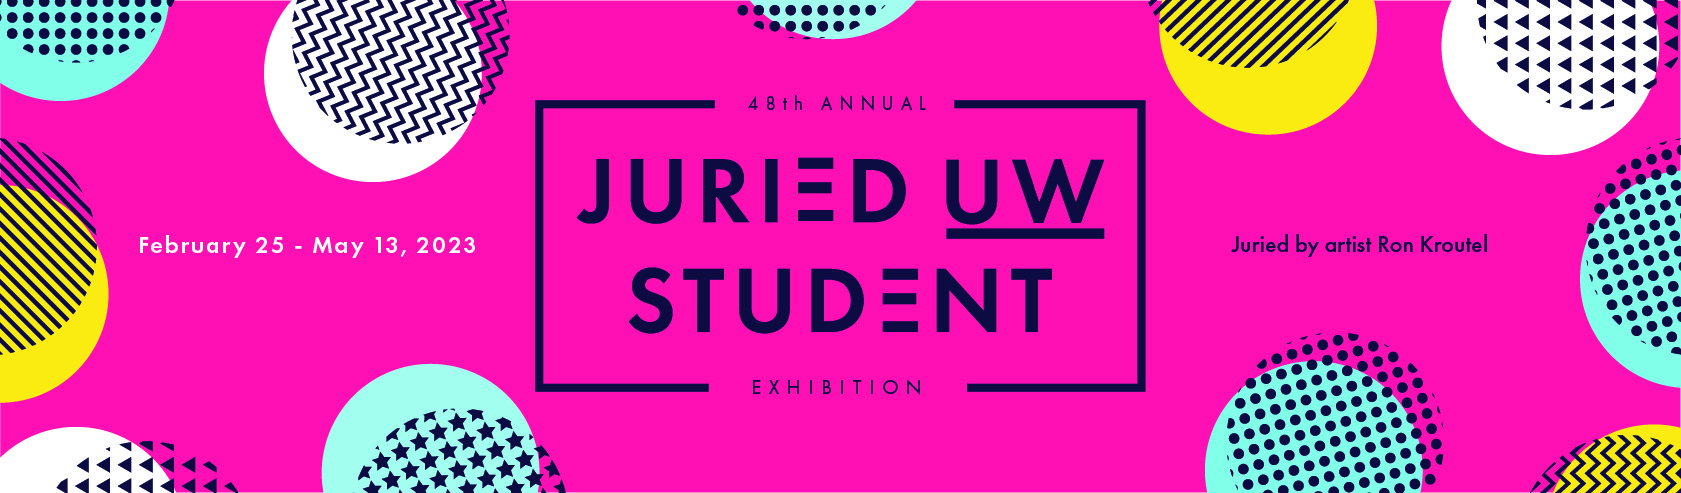 Juried UW Student Exhibition